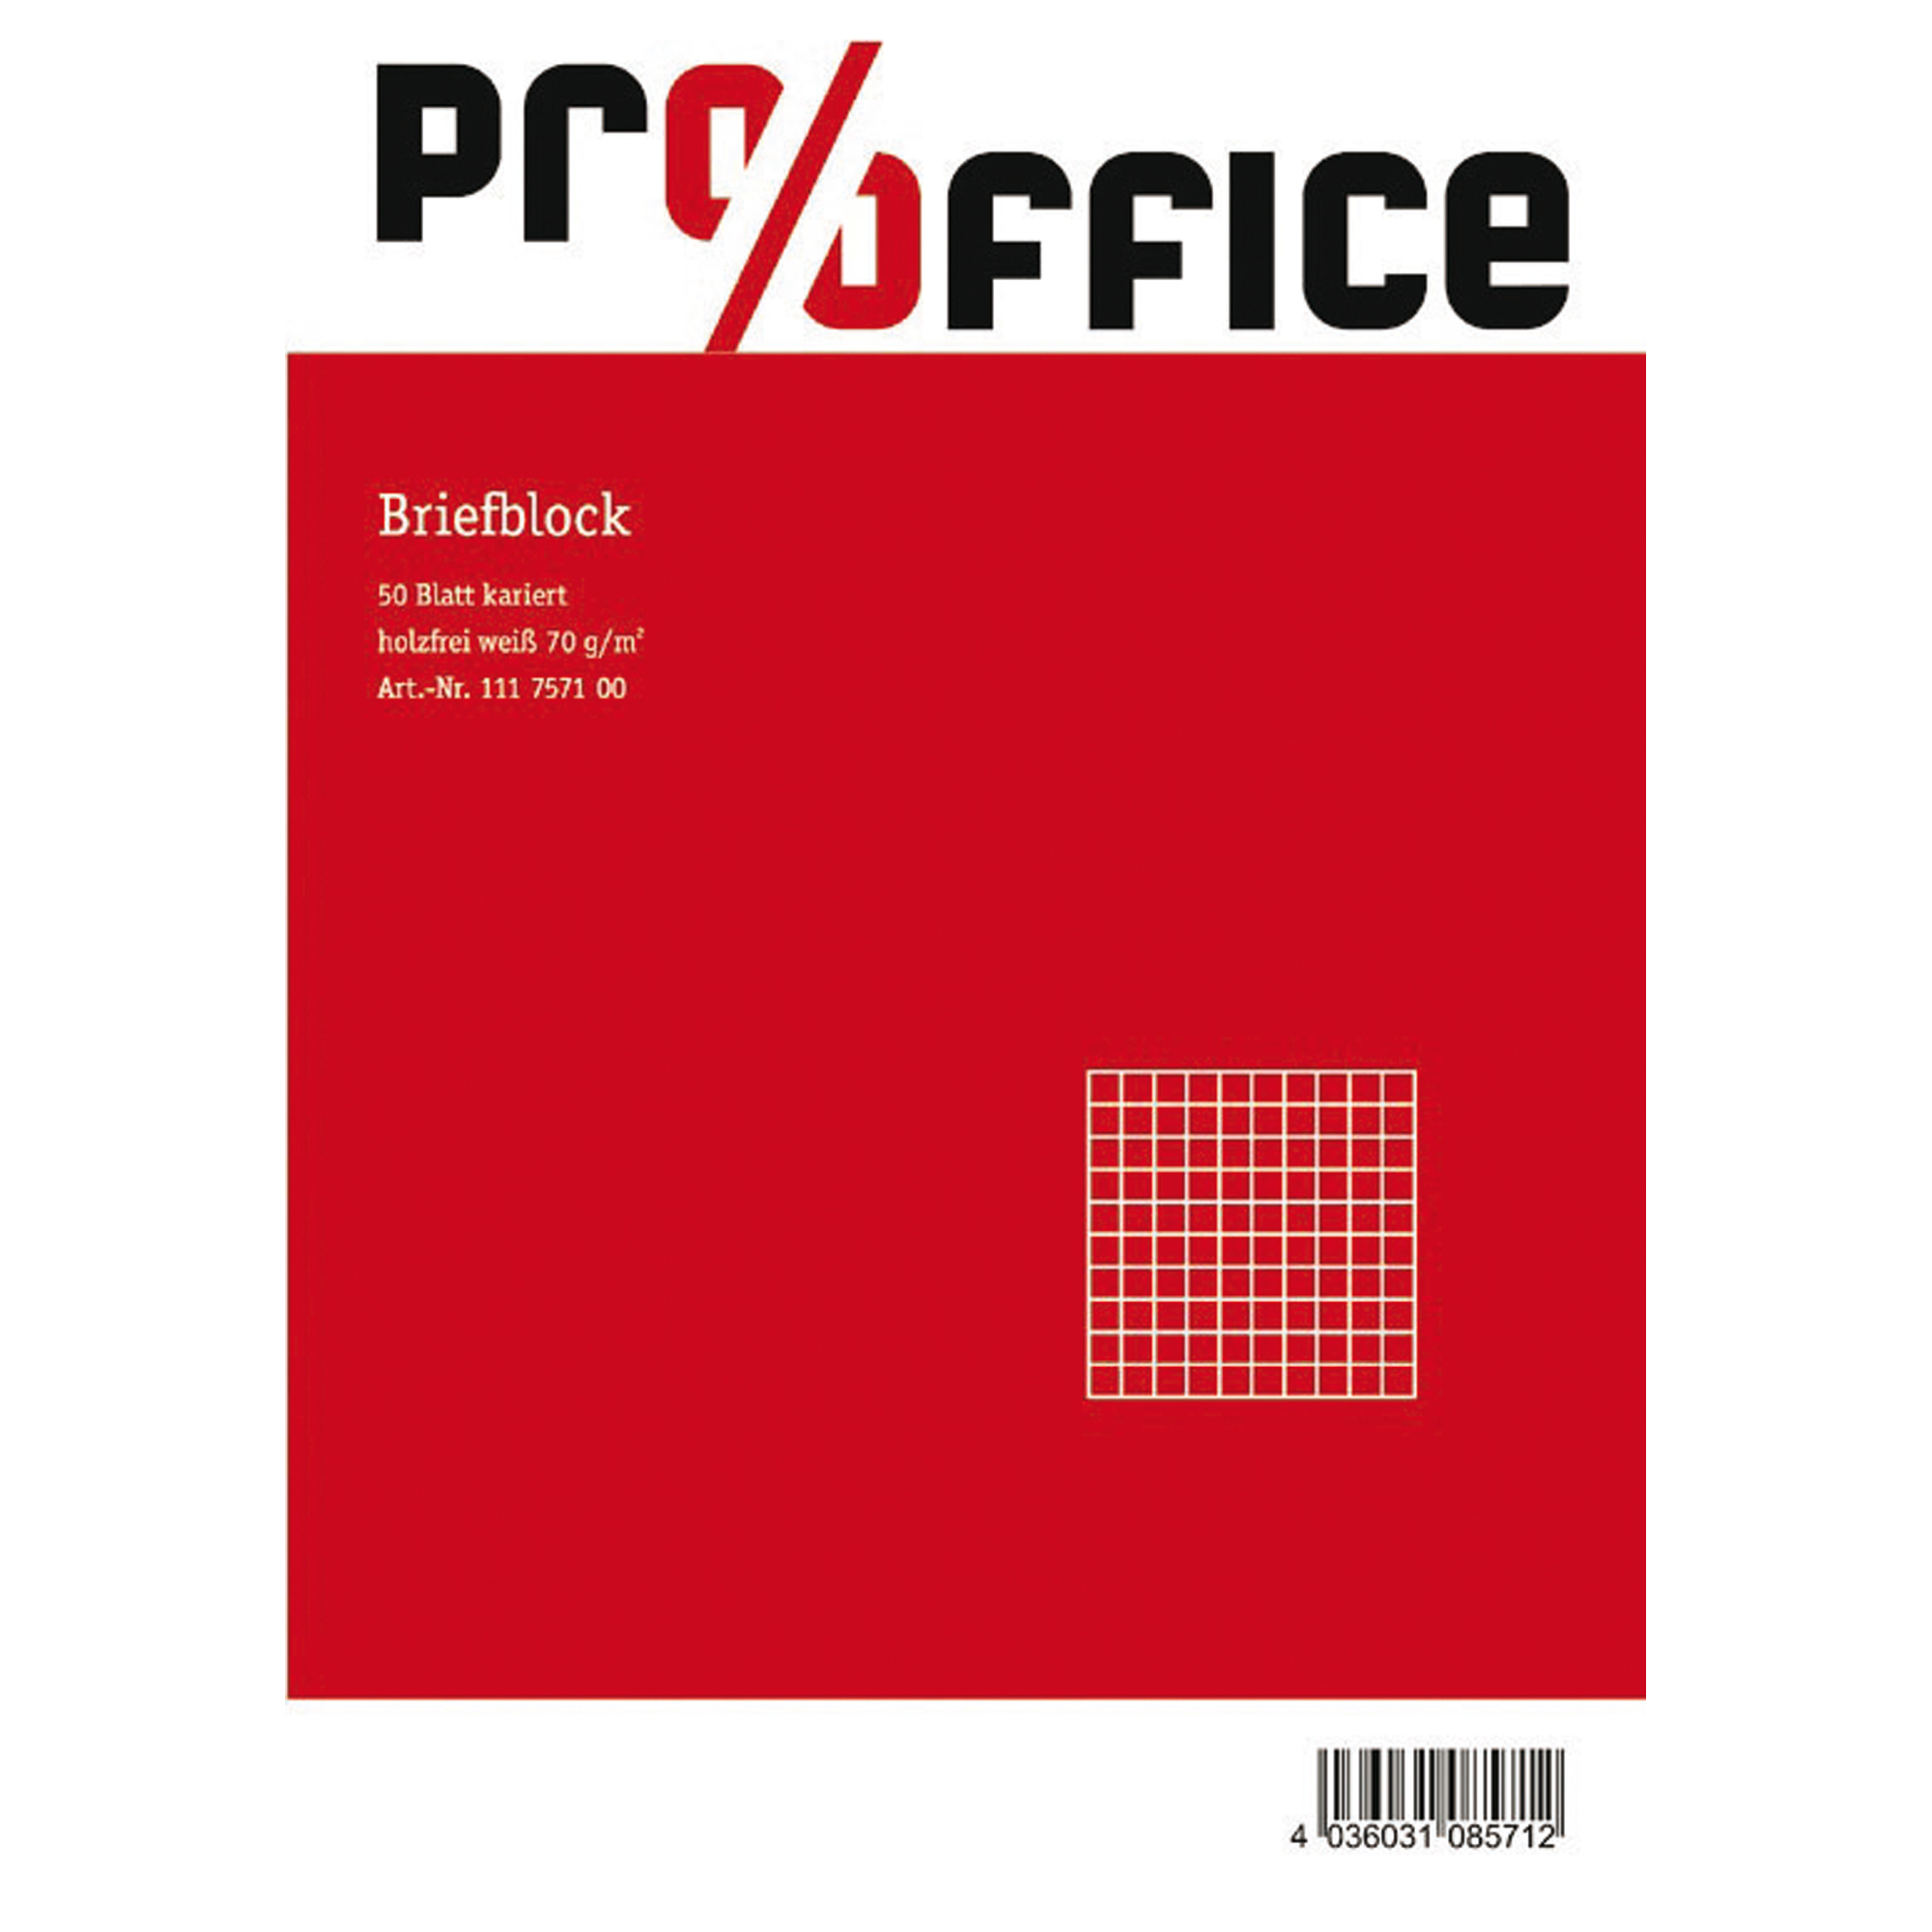 Pro/Office Briefblock DIN A4 4fach Lochung